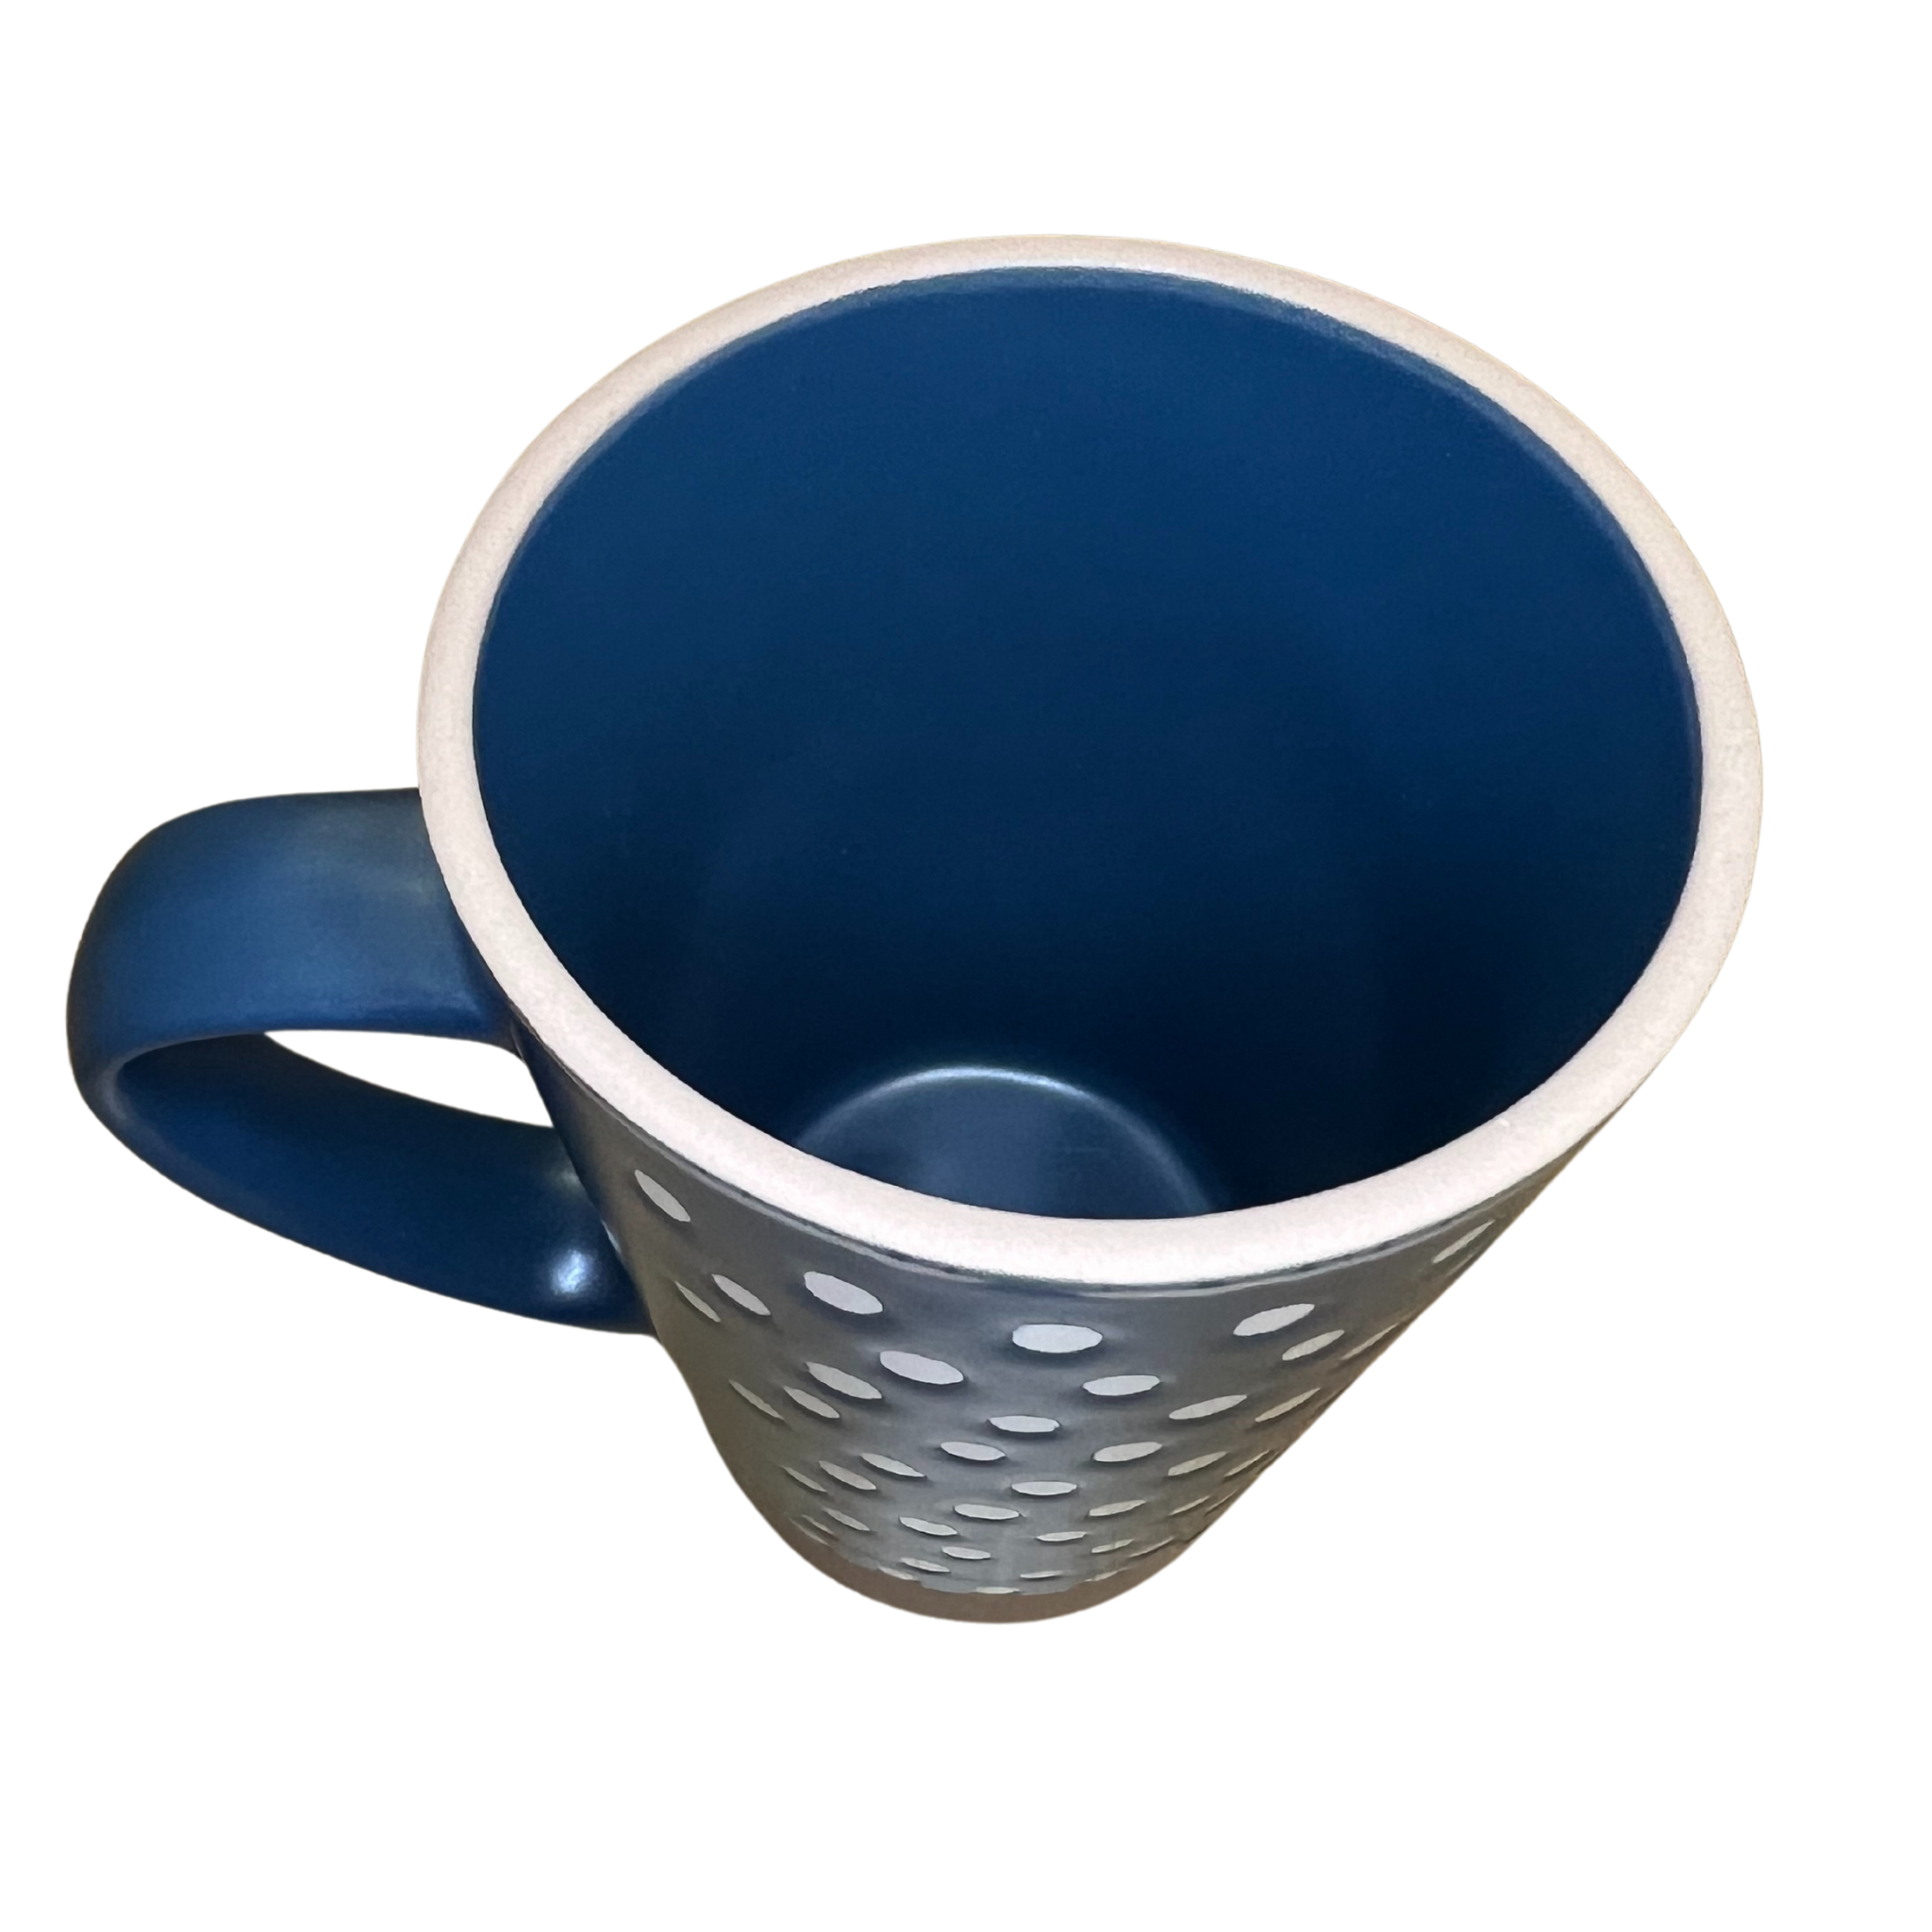 Stoneware Navy Blue Mug with Polka Dot Design